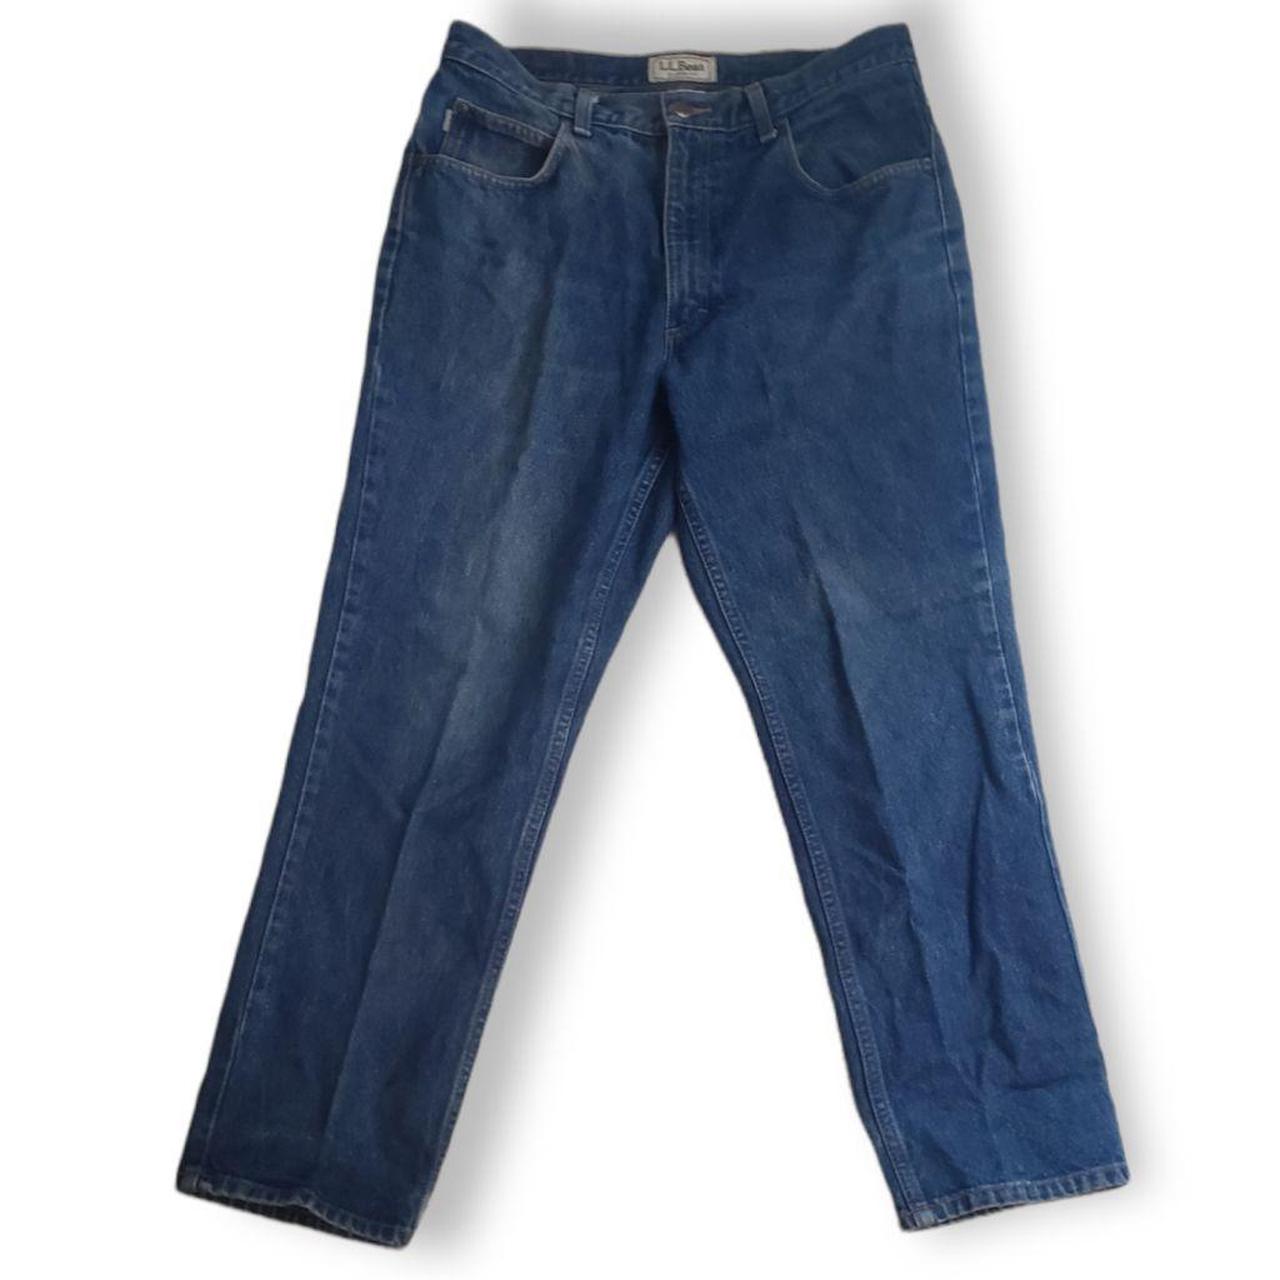 LL Bean straight leg jeans medium wash size 33x29... - Depop